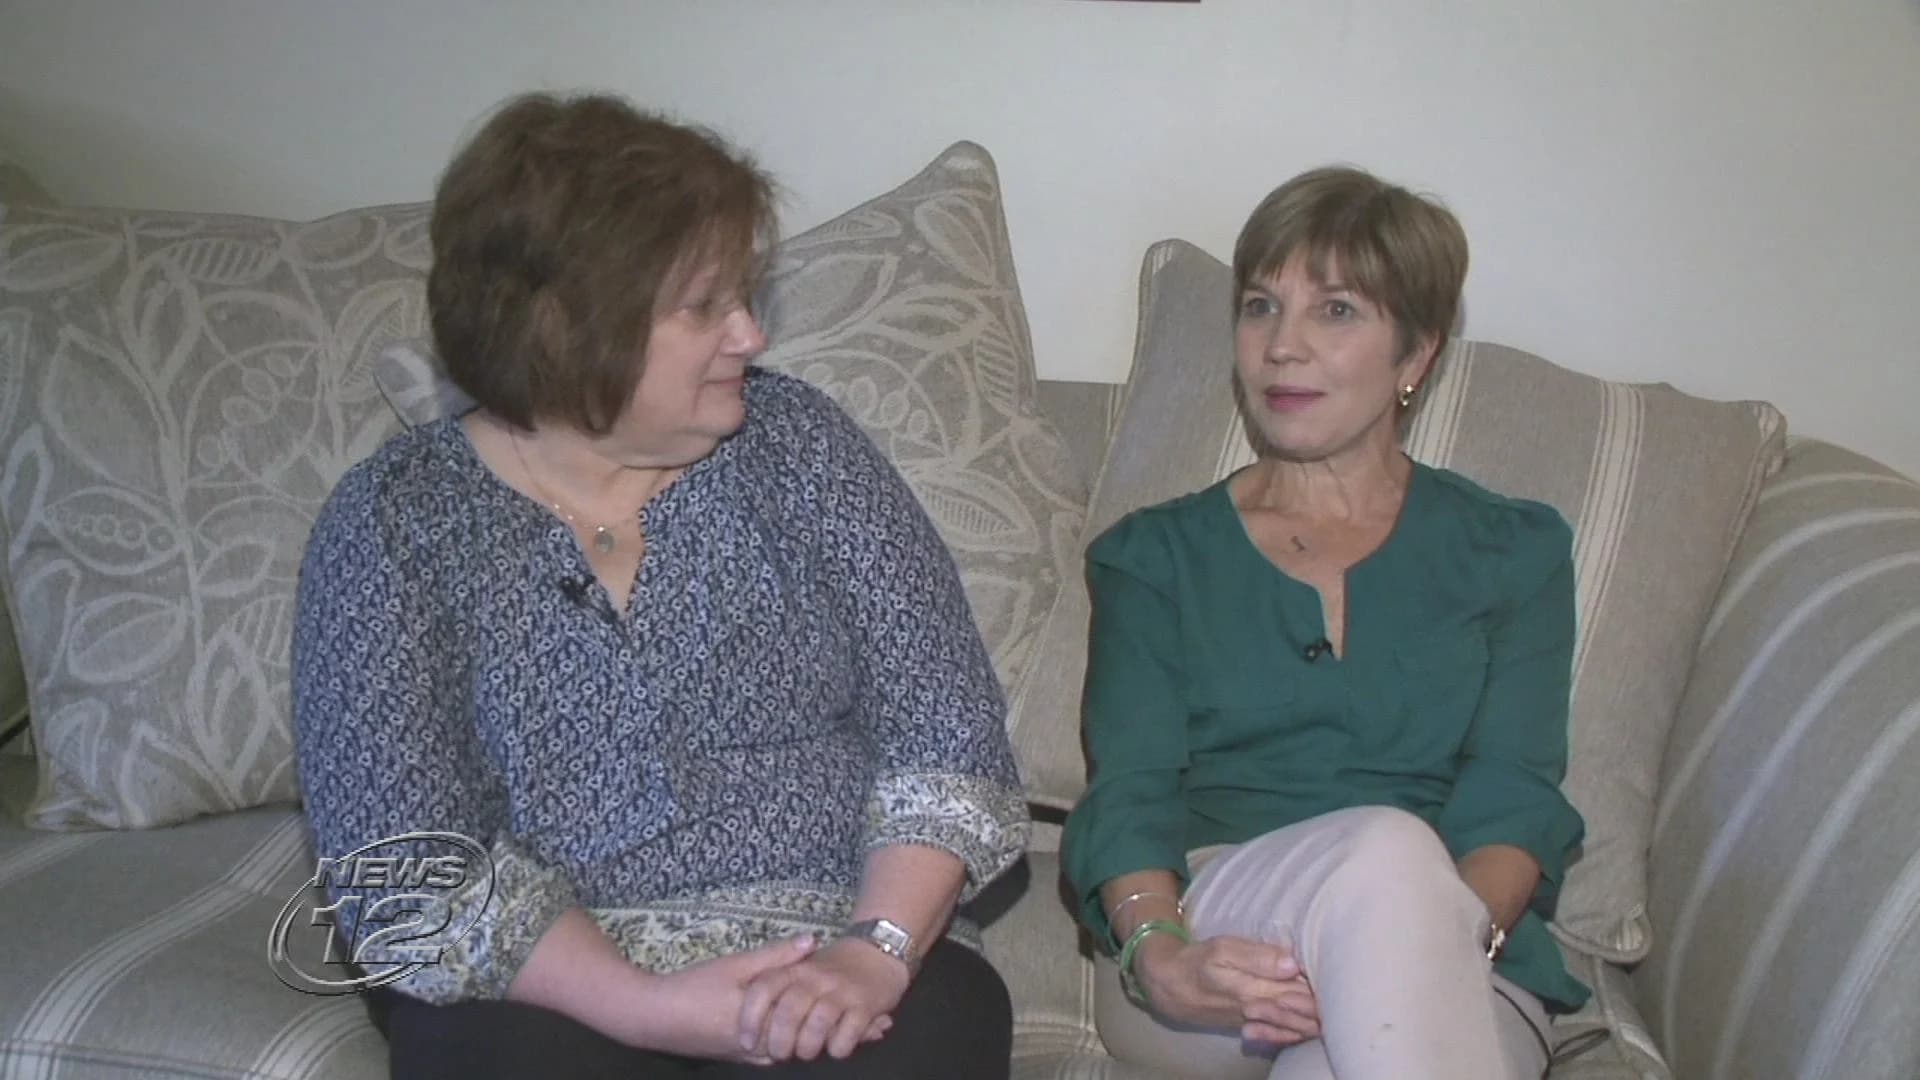 Twist of fate brings together 2 HV women battling rare disease